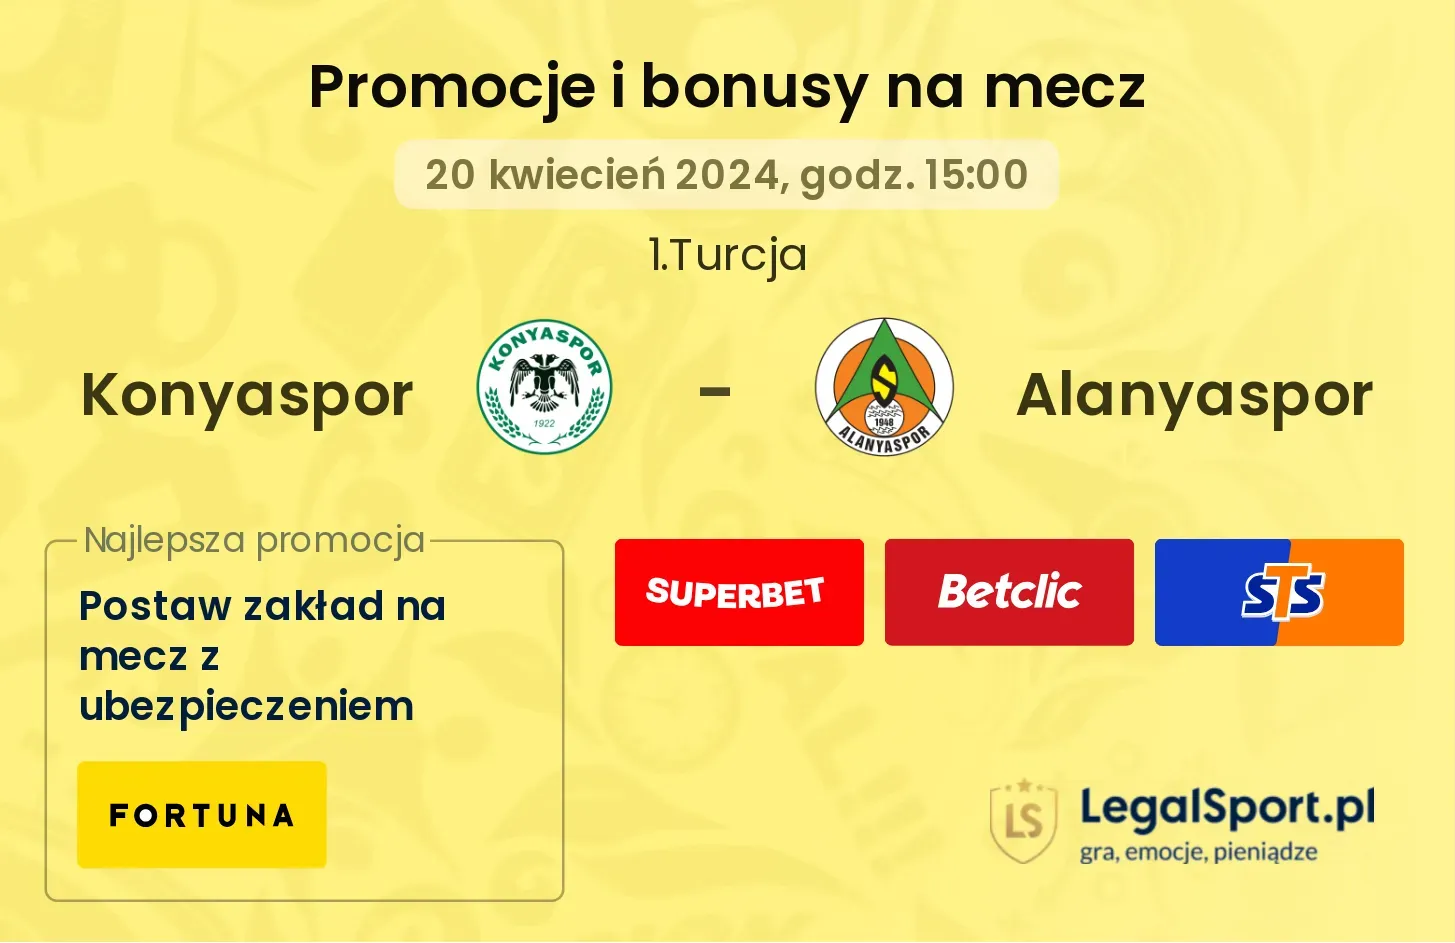 Konyaspor - Alanyaspor promocje bonusy na mecz